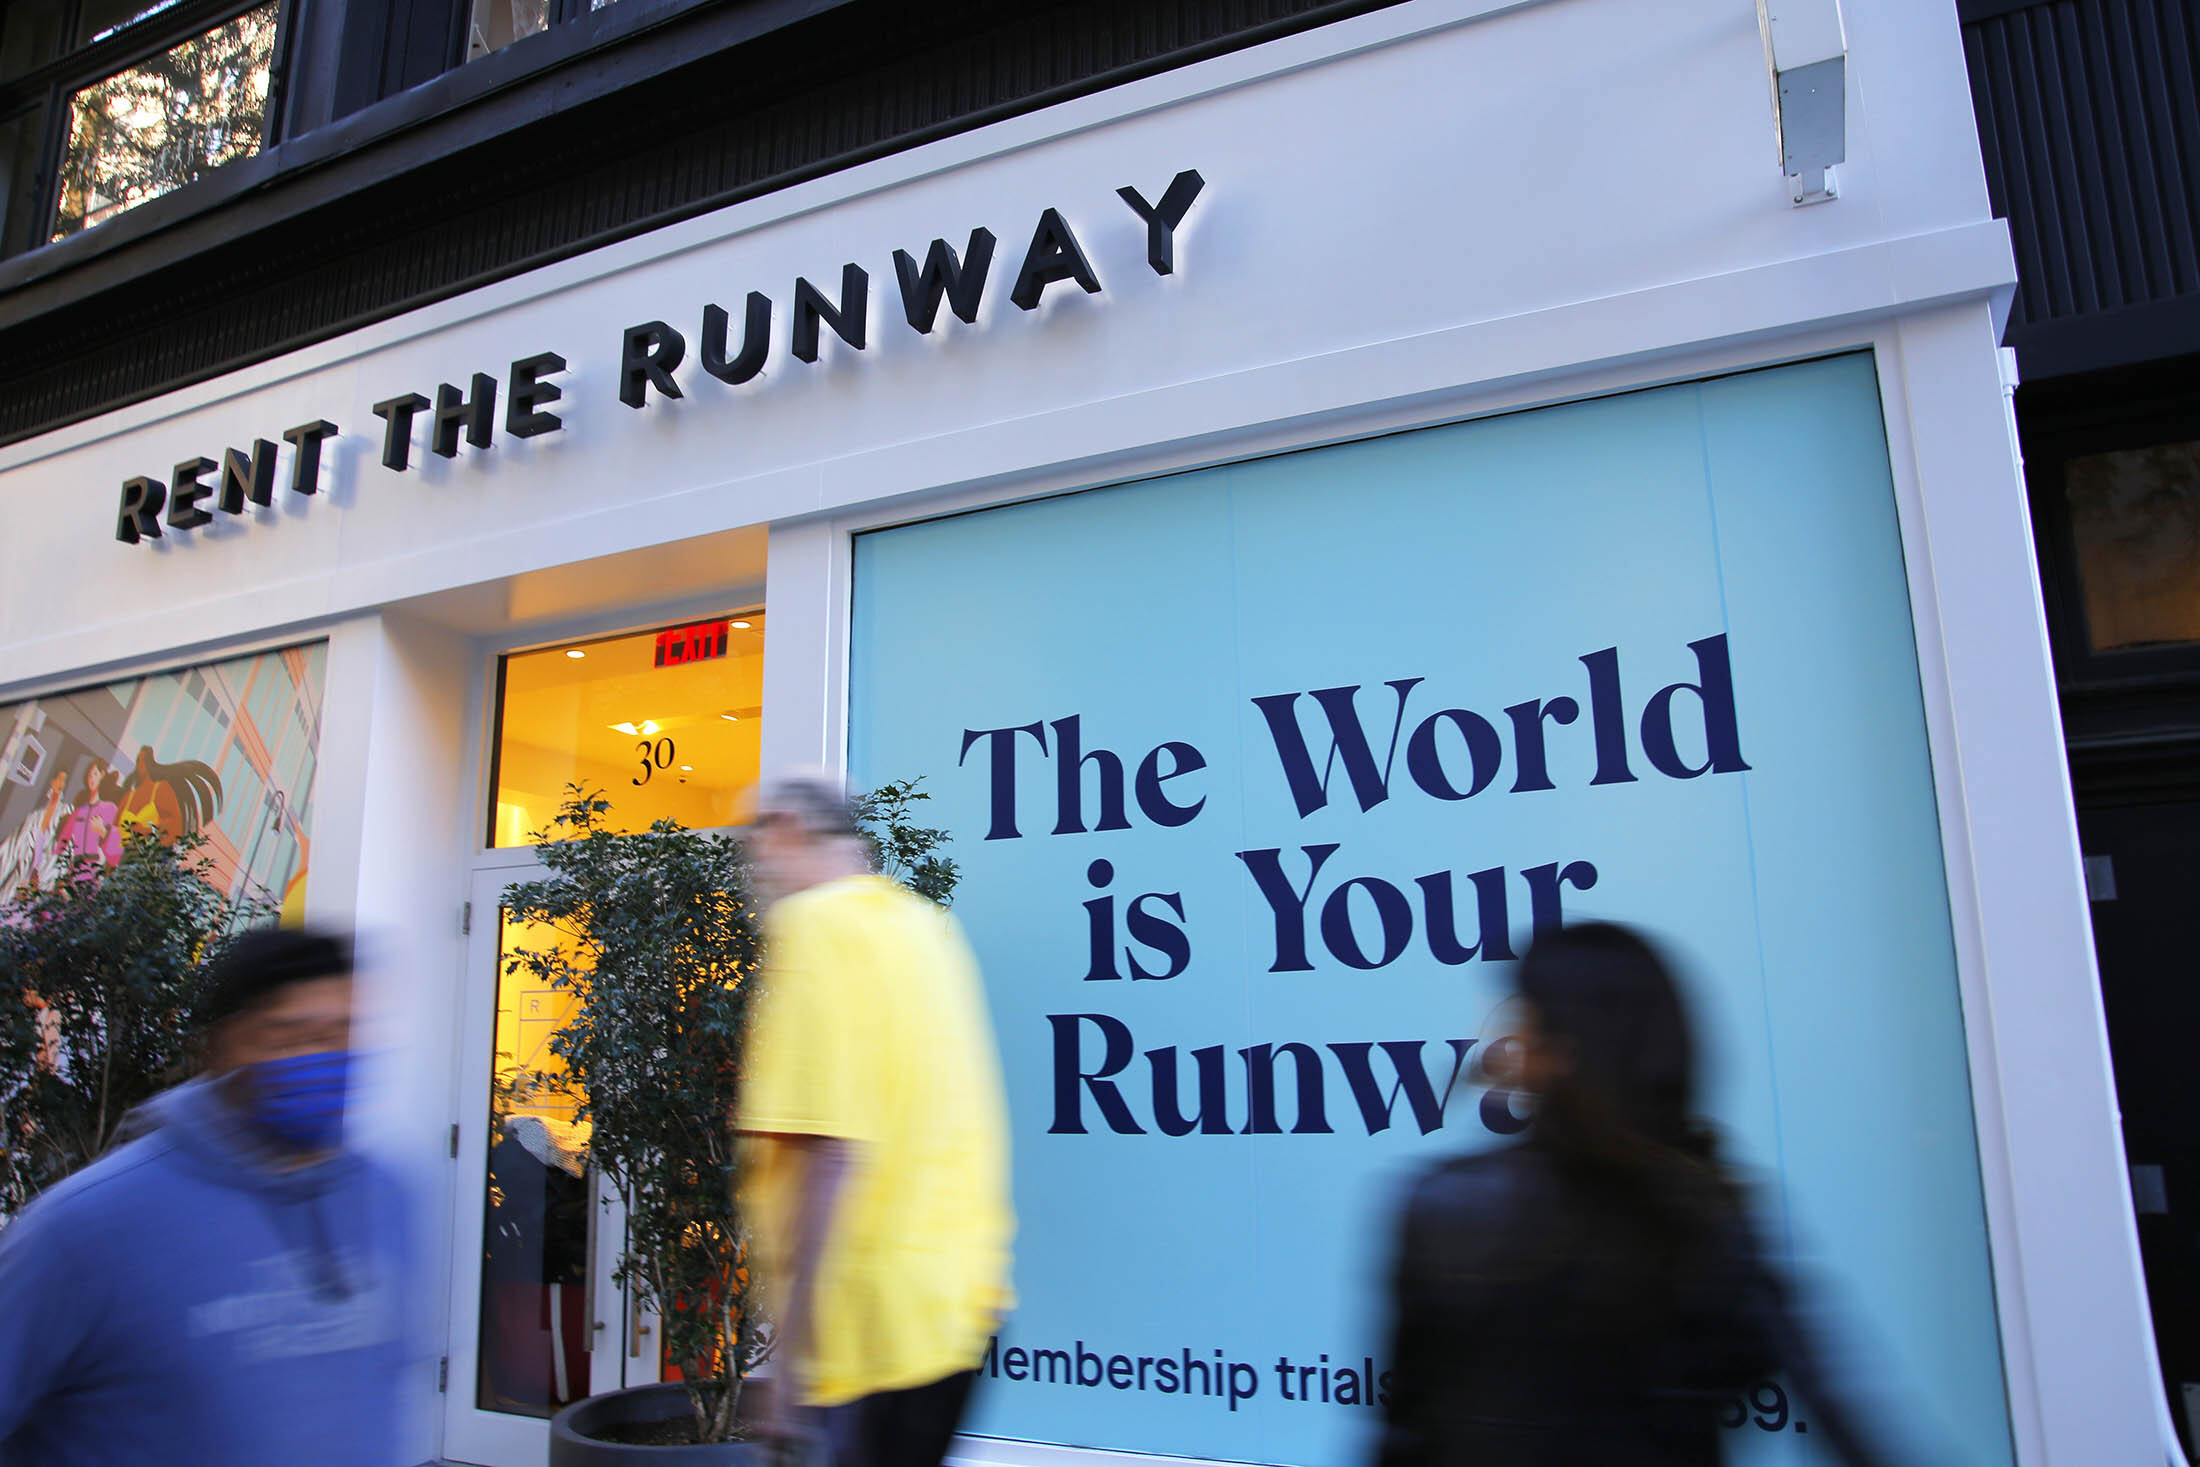 Designer Fashion Clothing Rental Company Rent the Runway Hits a